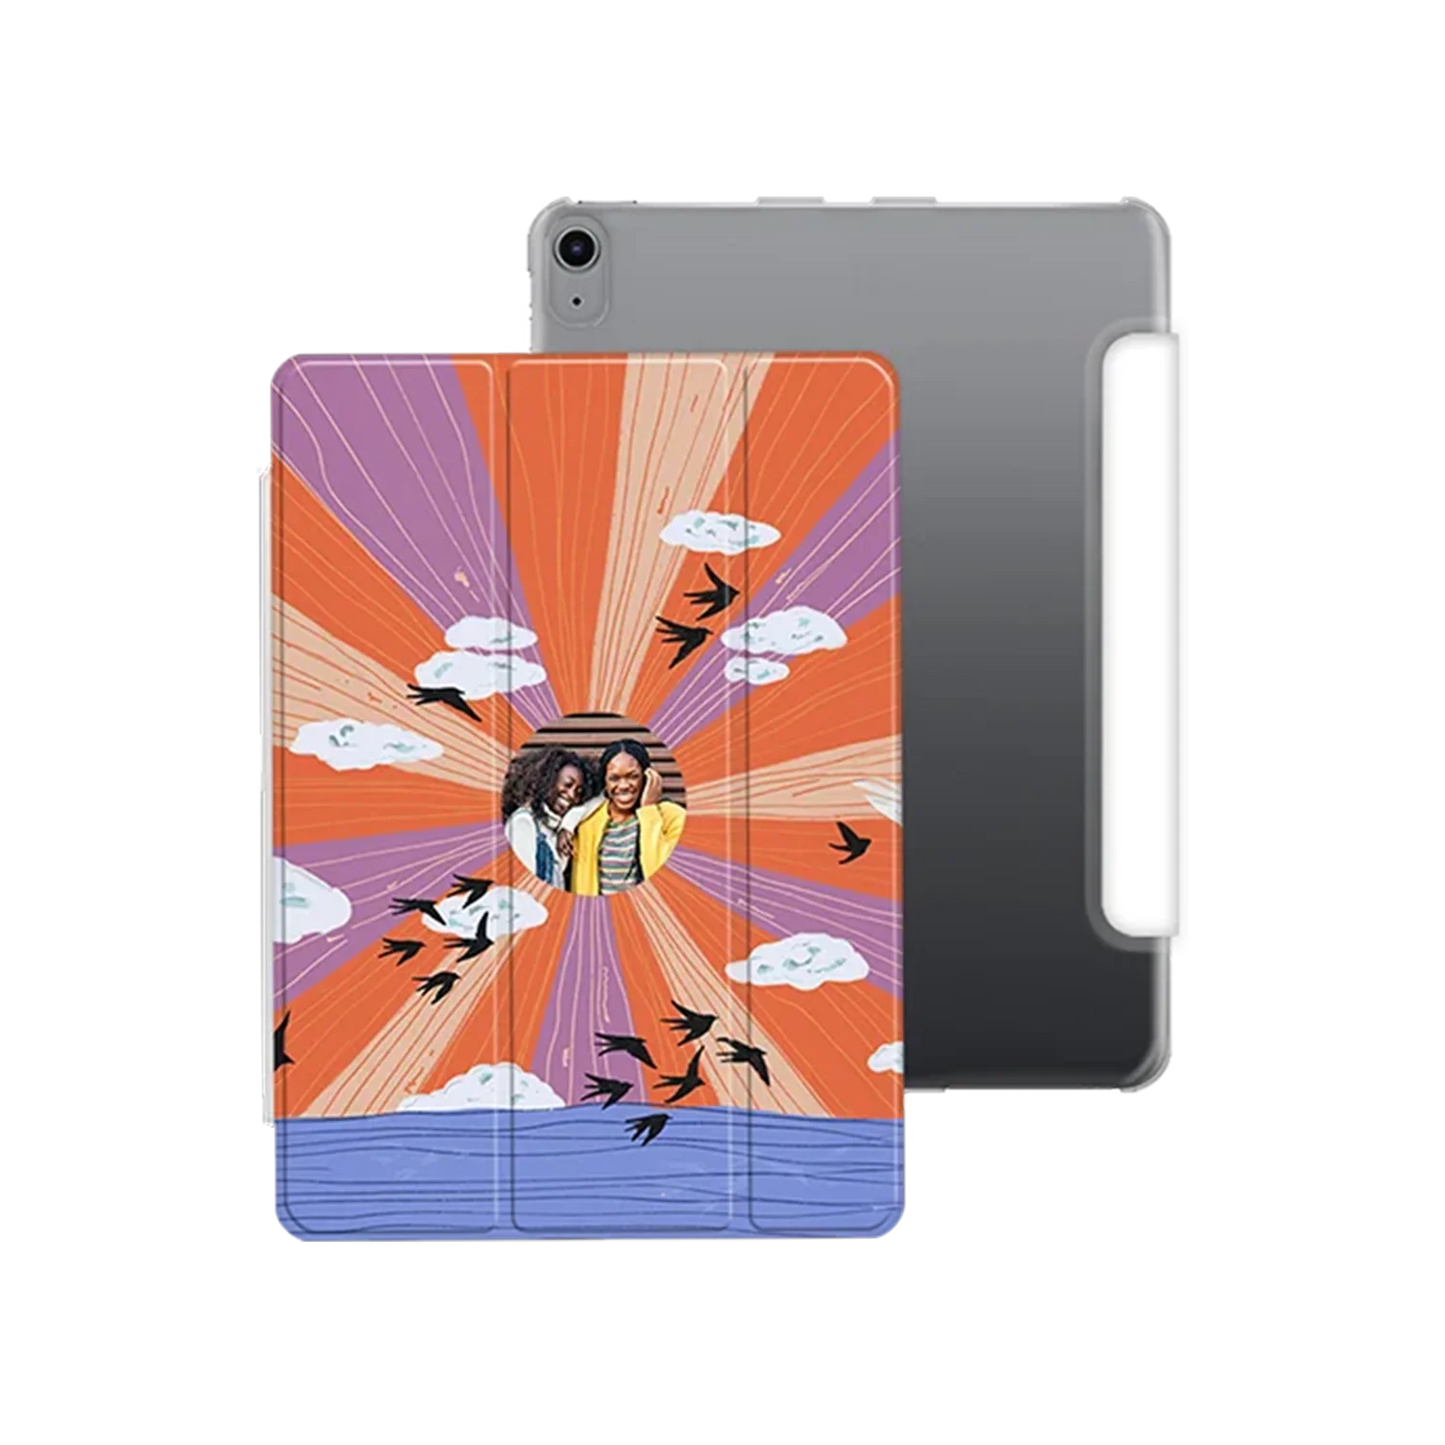 Sunset Light - Custom iPad Case